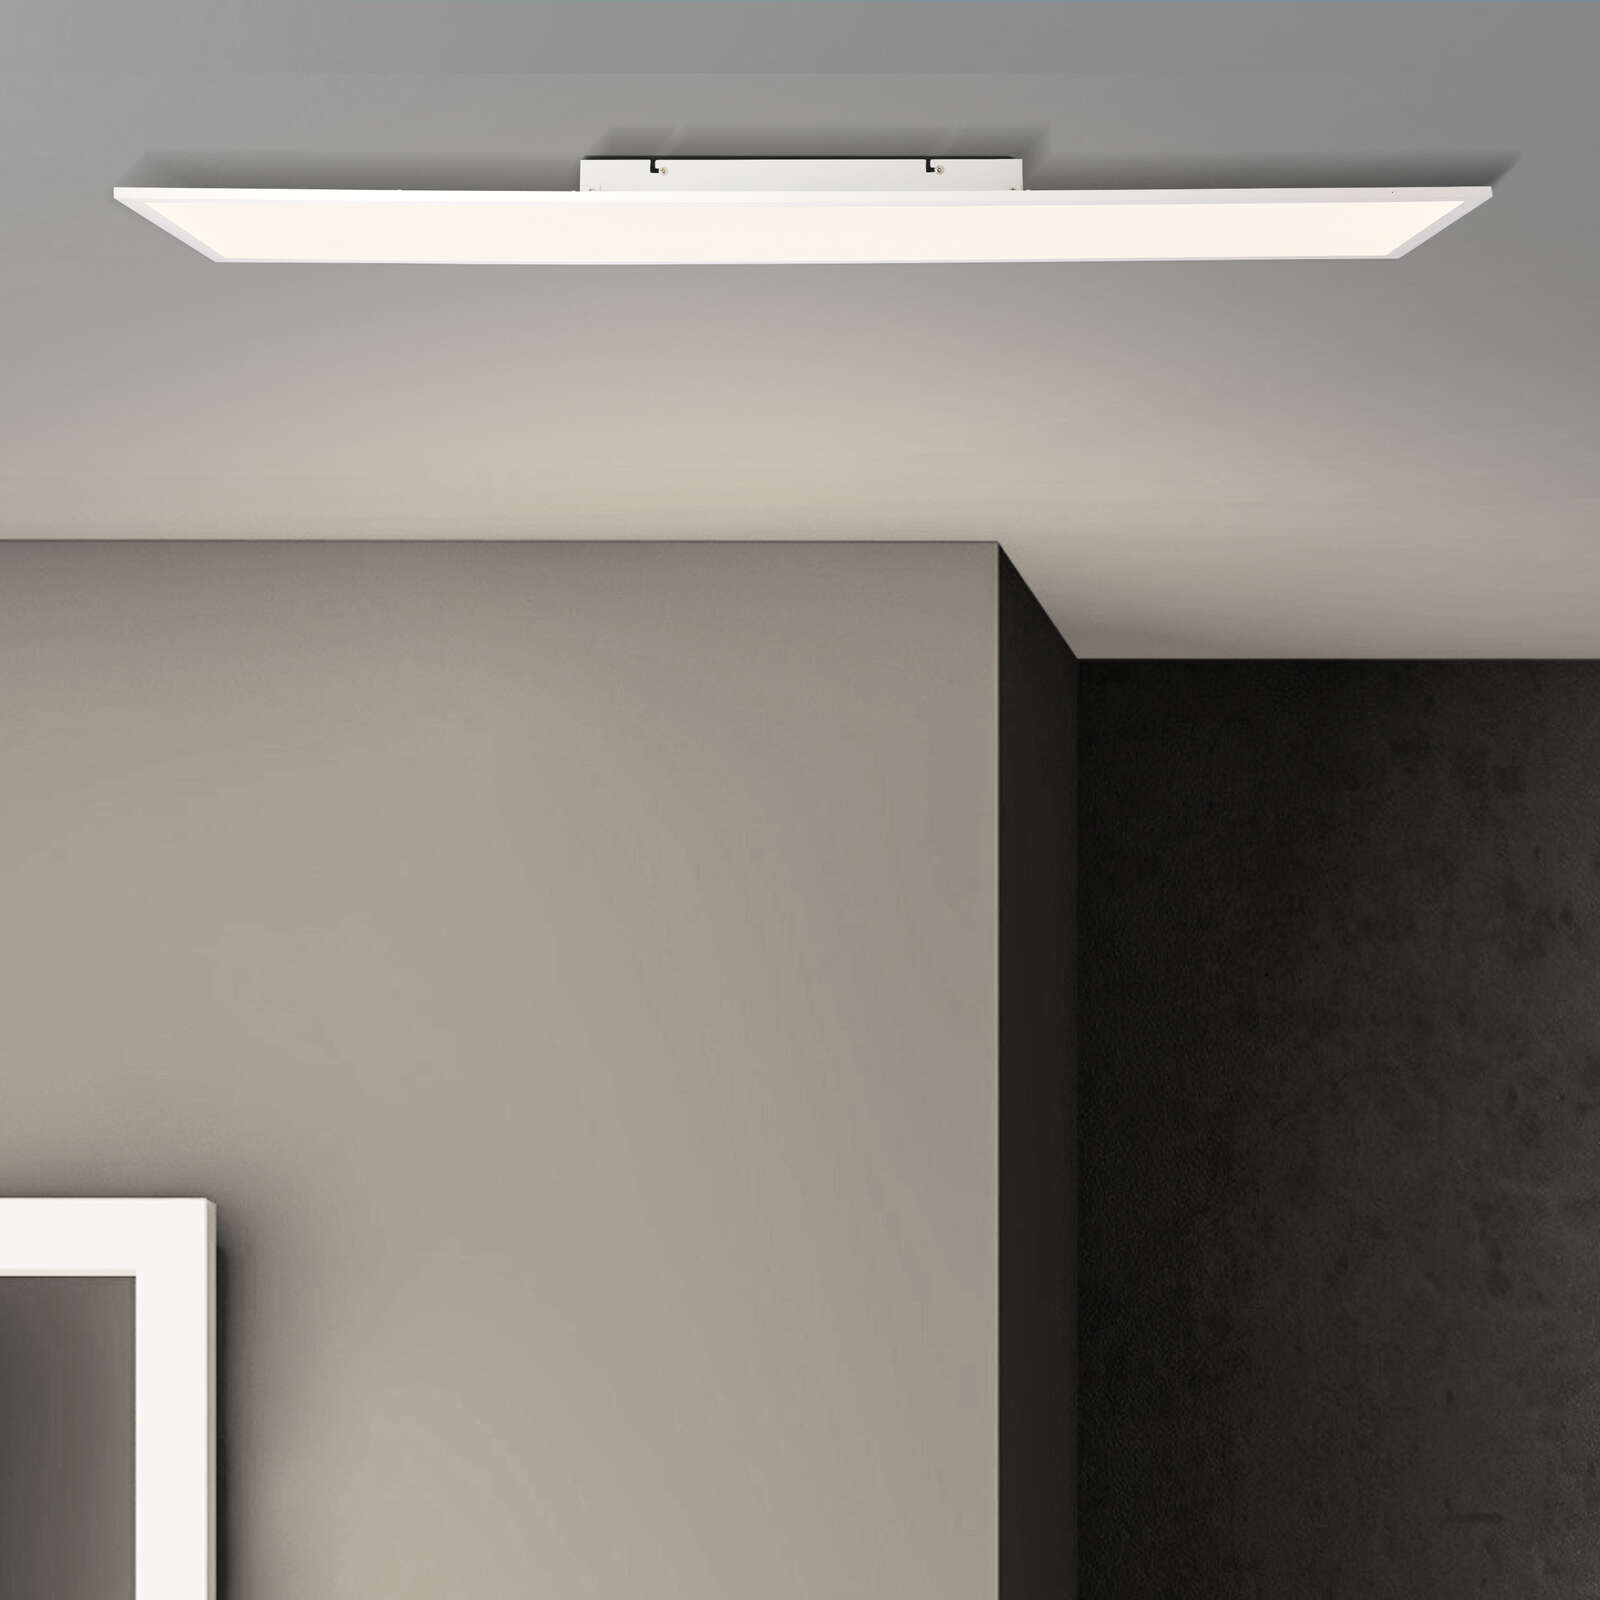             Plastic ceiling light - Constantin 11 - White
        